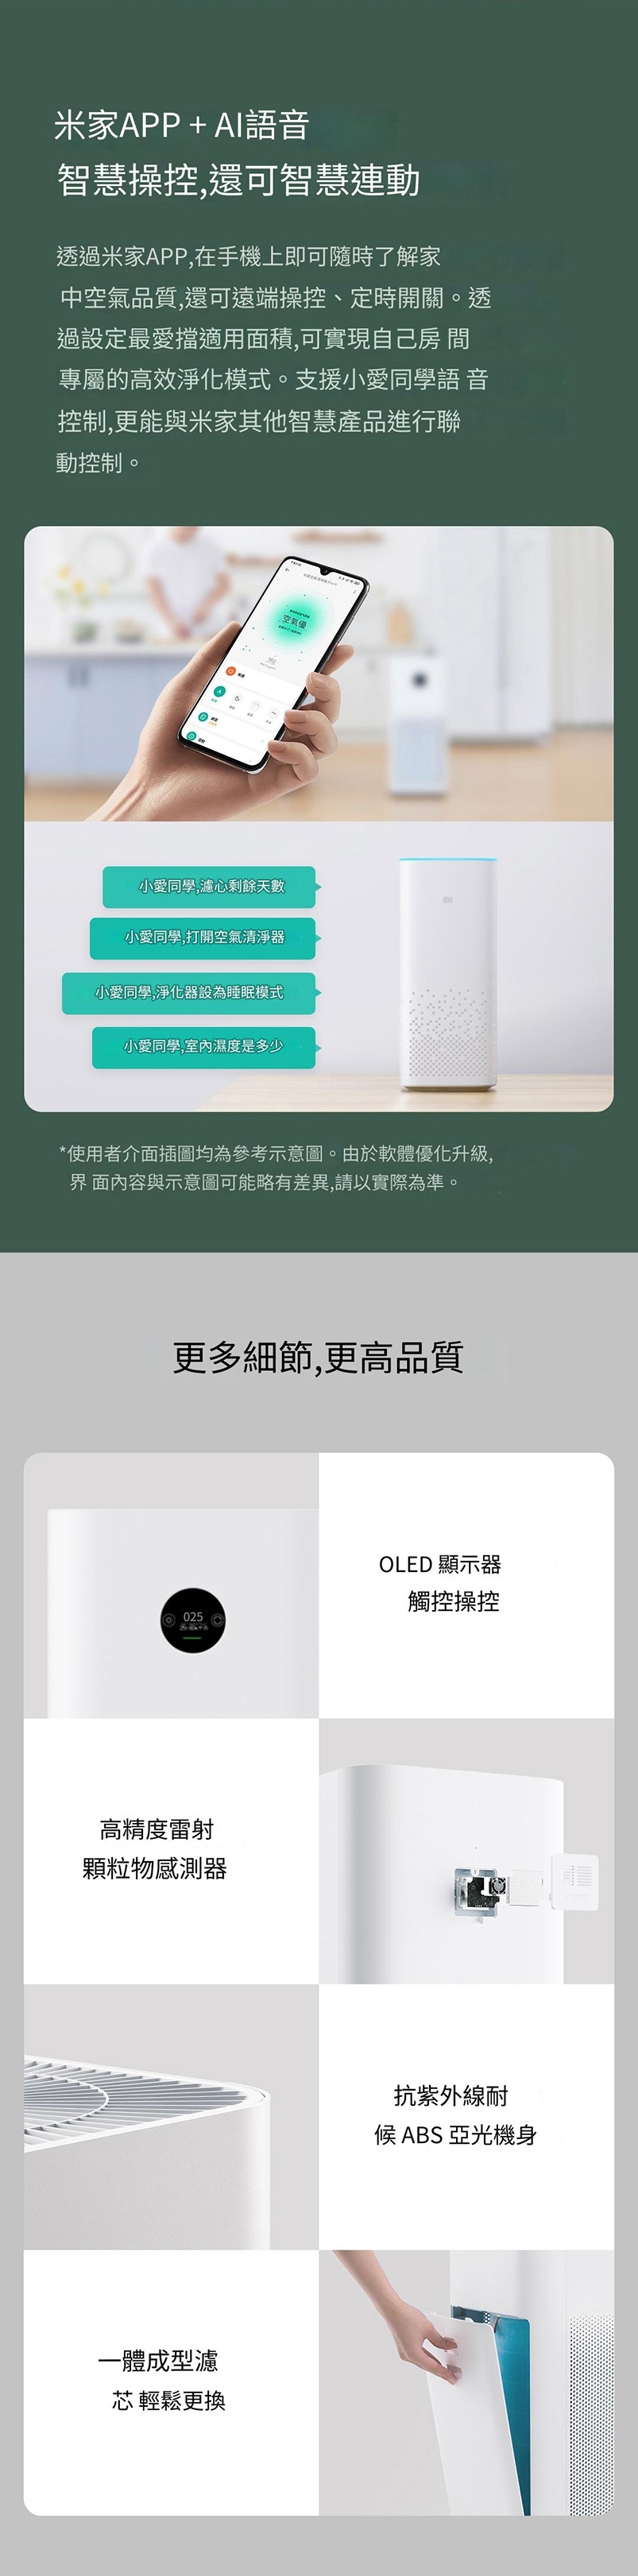 Xiaomi米家空氣清淨機Pro H 白色